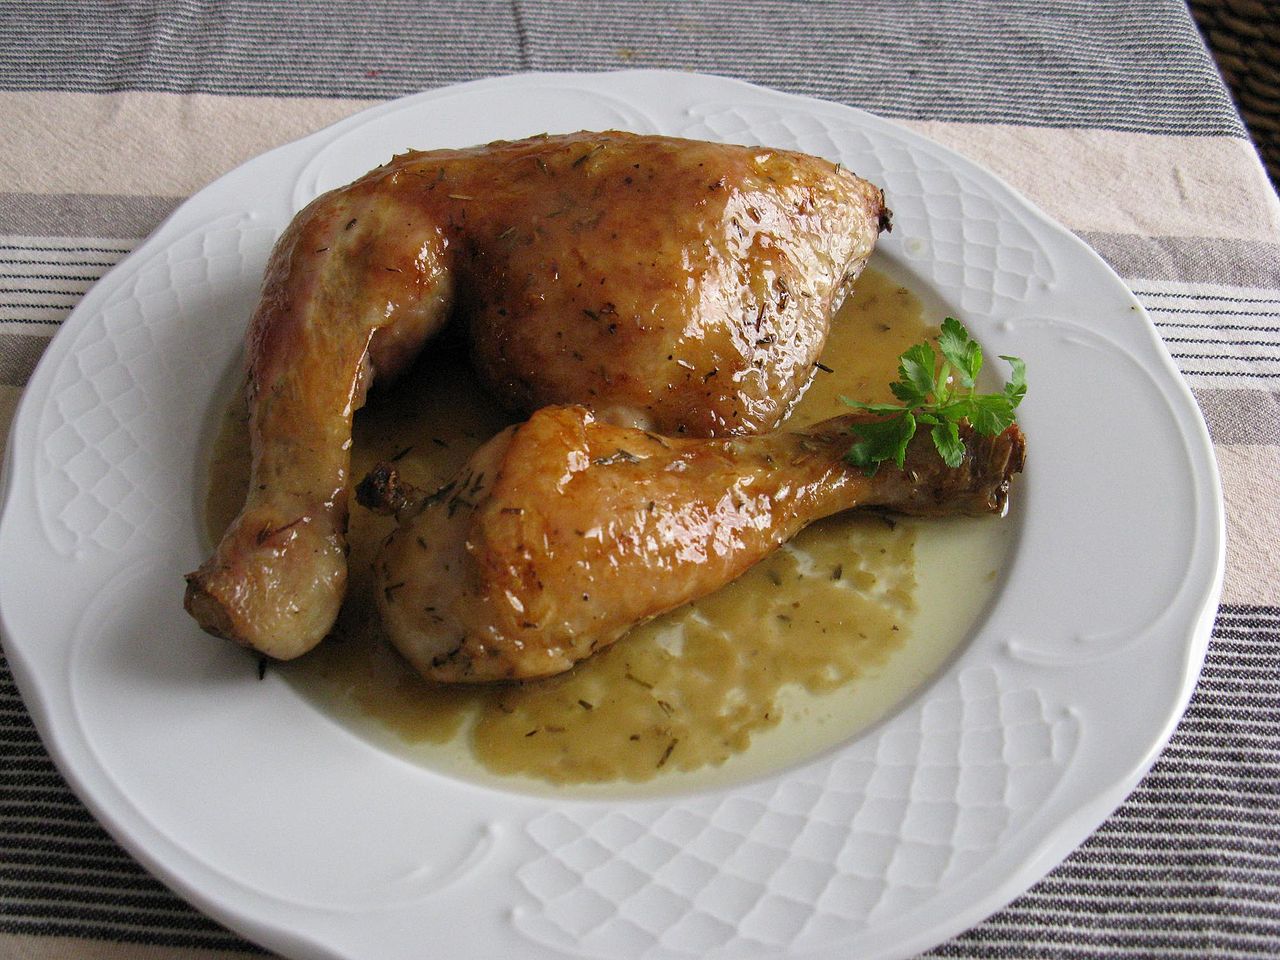 File:Prepared chicken in oven.jpg - Wikimedia Commons